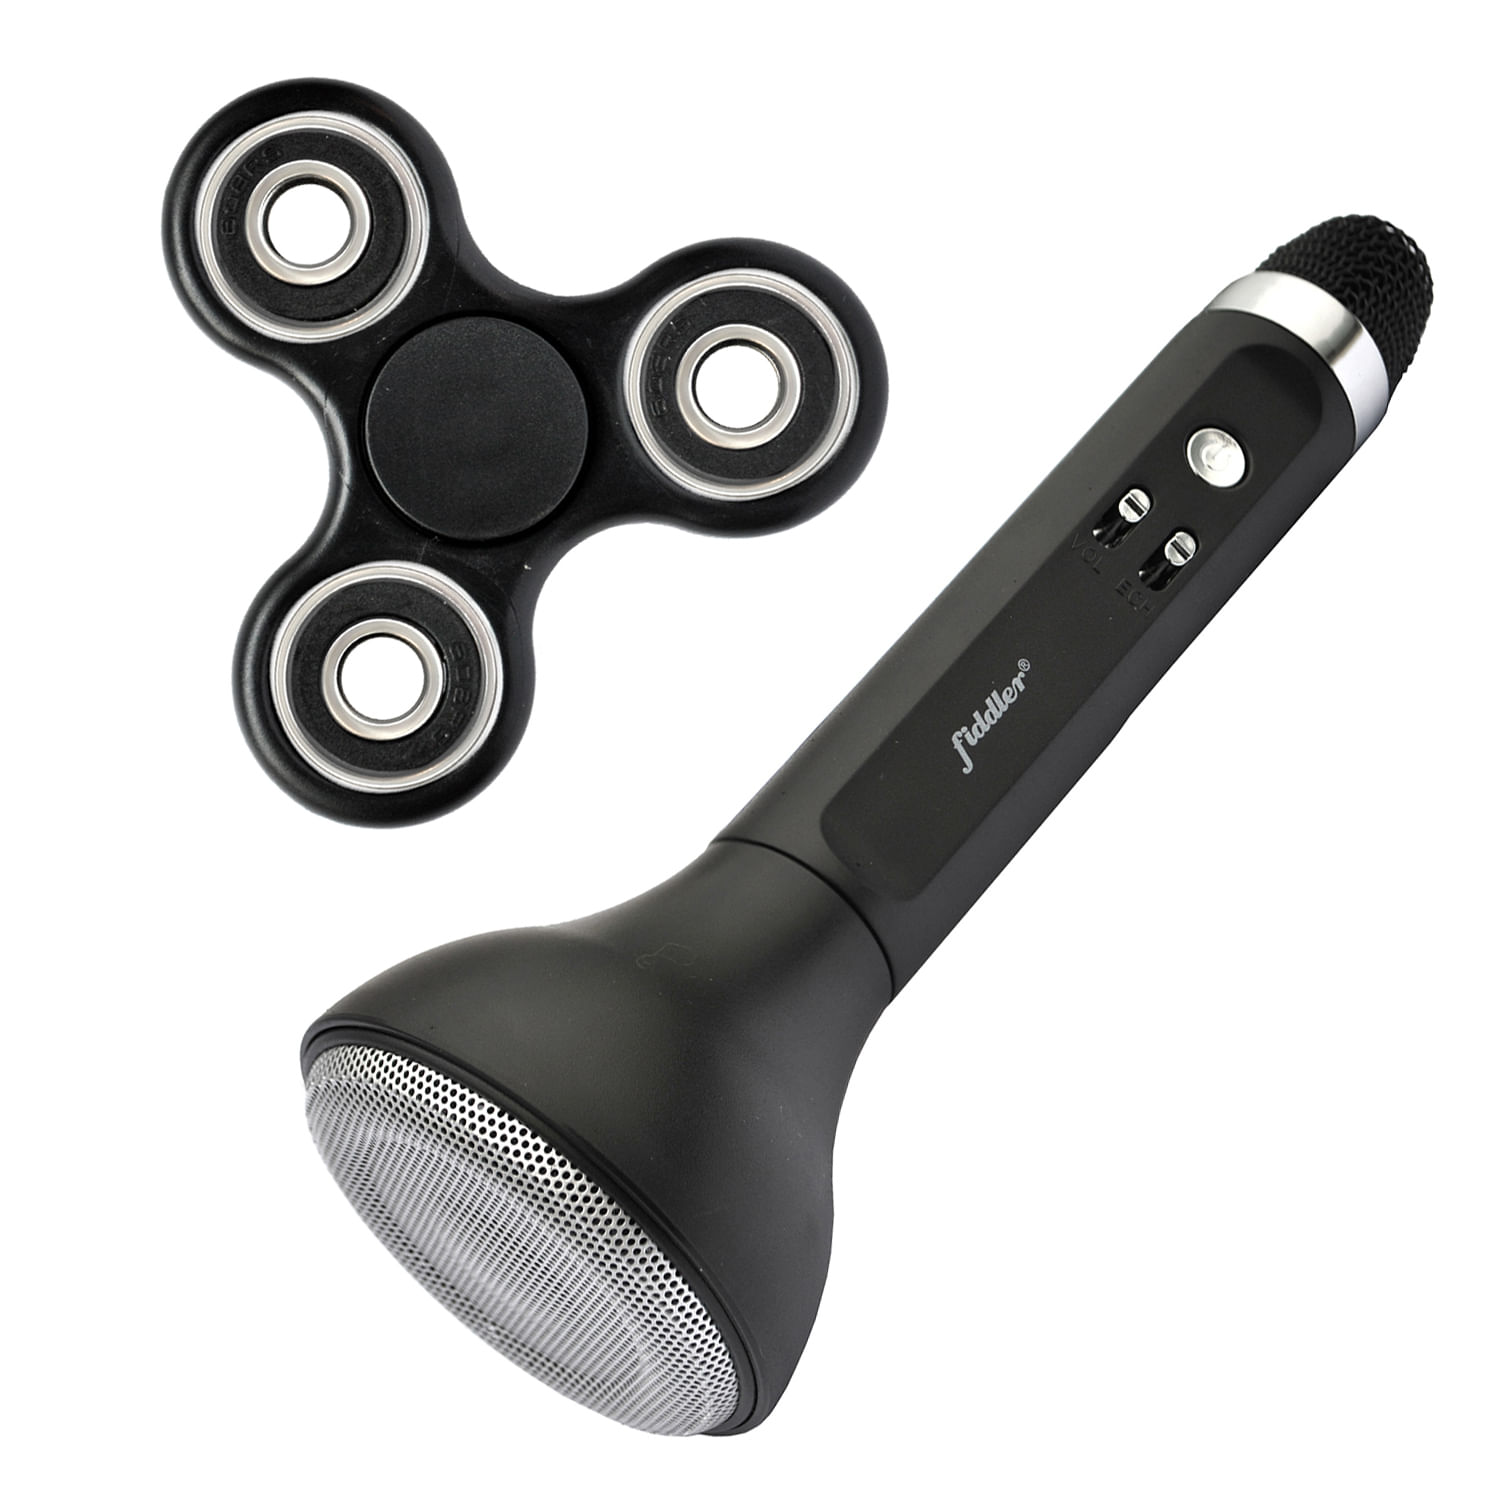 Parlante karaoke Bluetooth 8 luces con micrófono alámbrico Fiddler